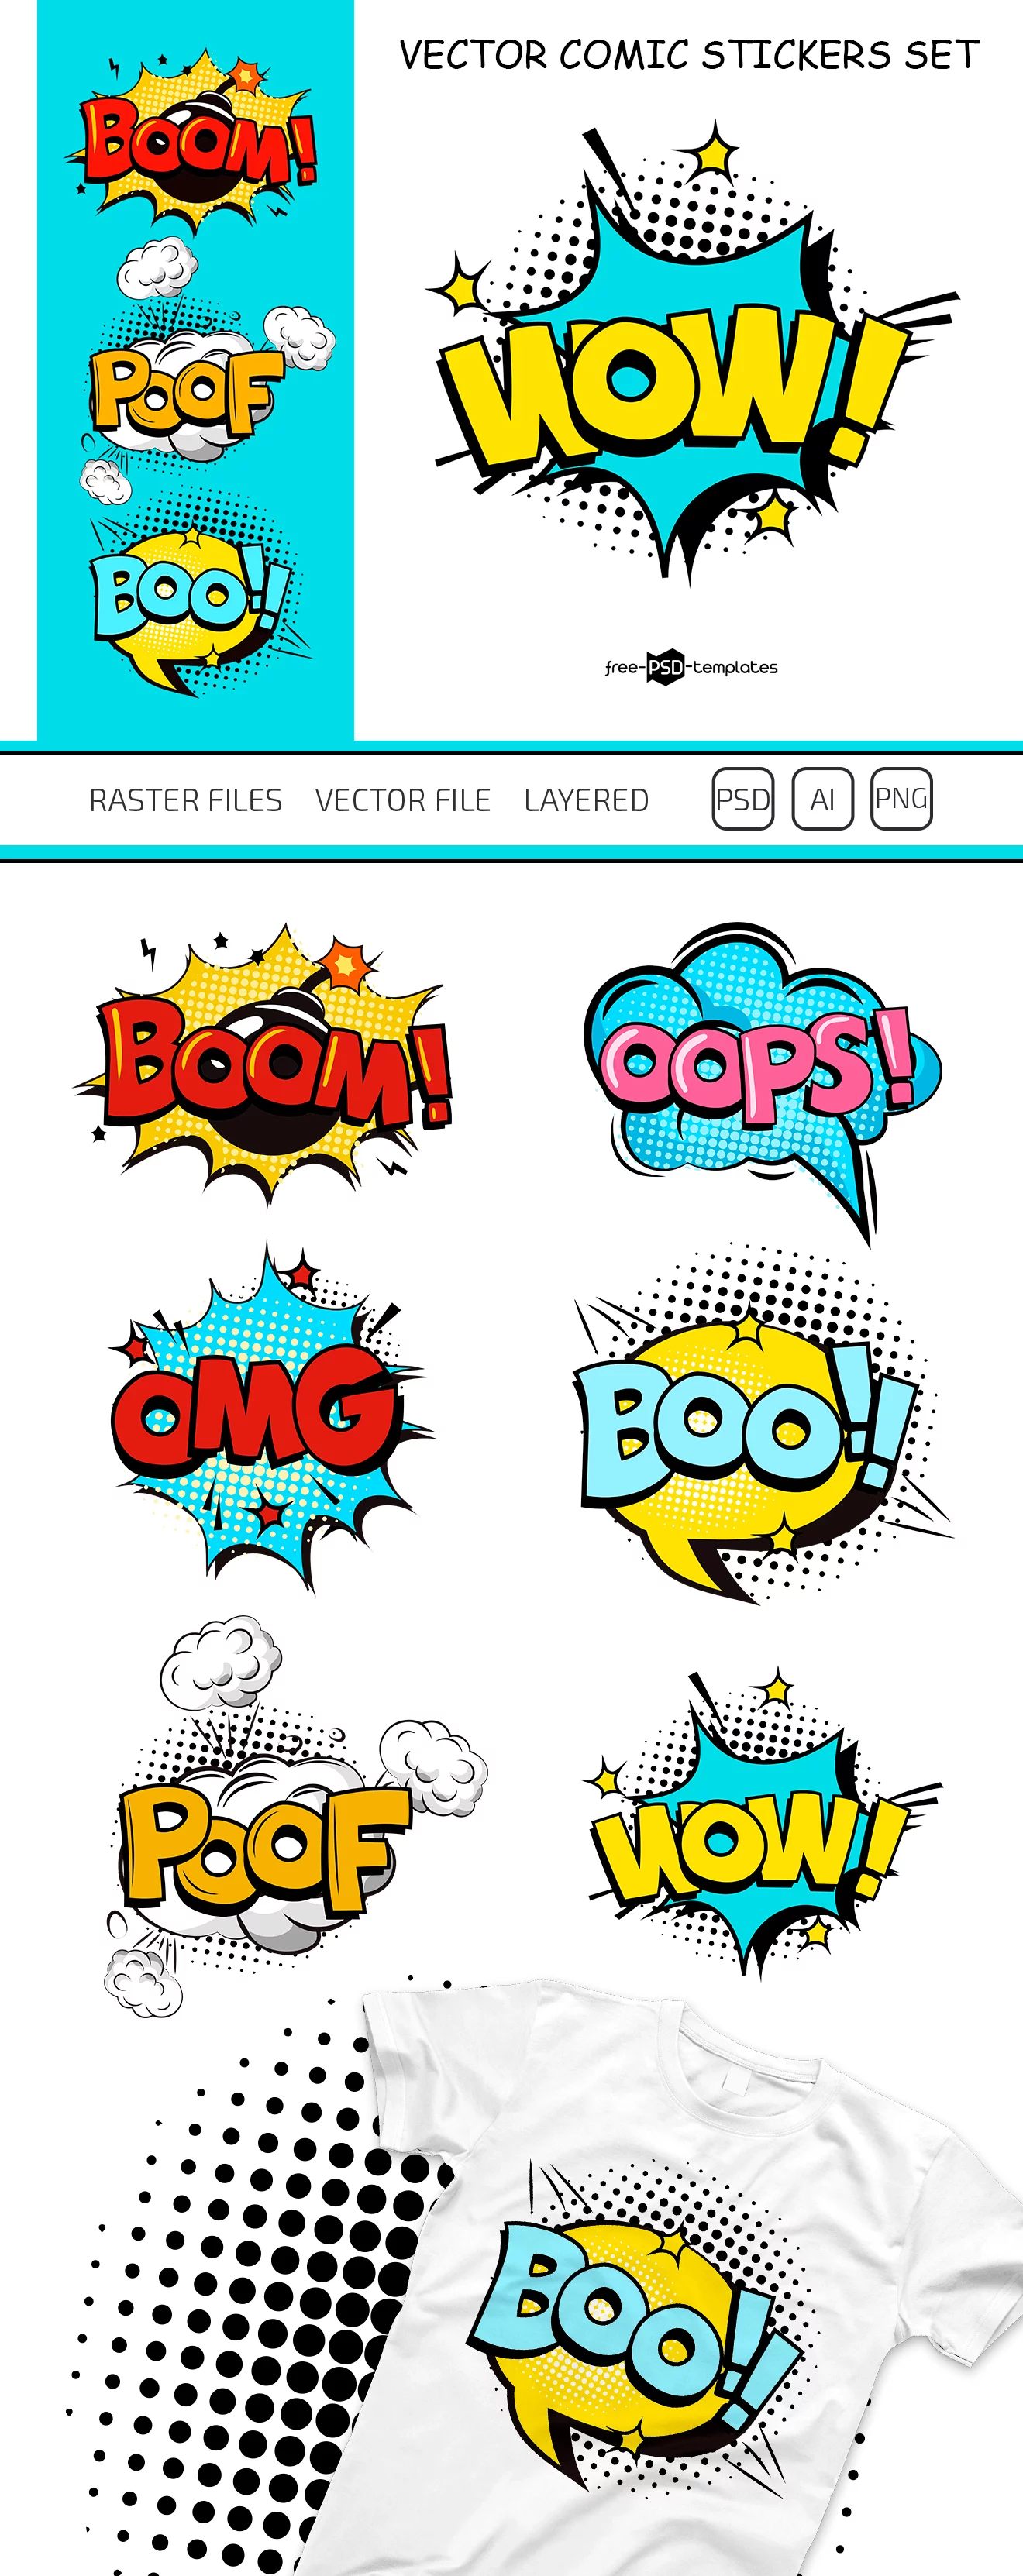 Free Vector Comic Stickers Set